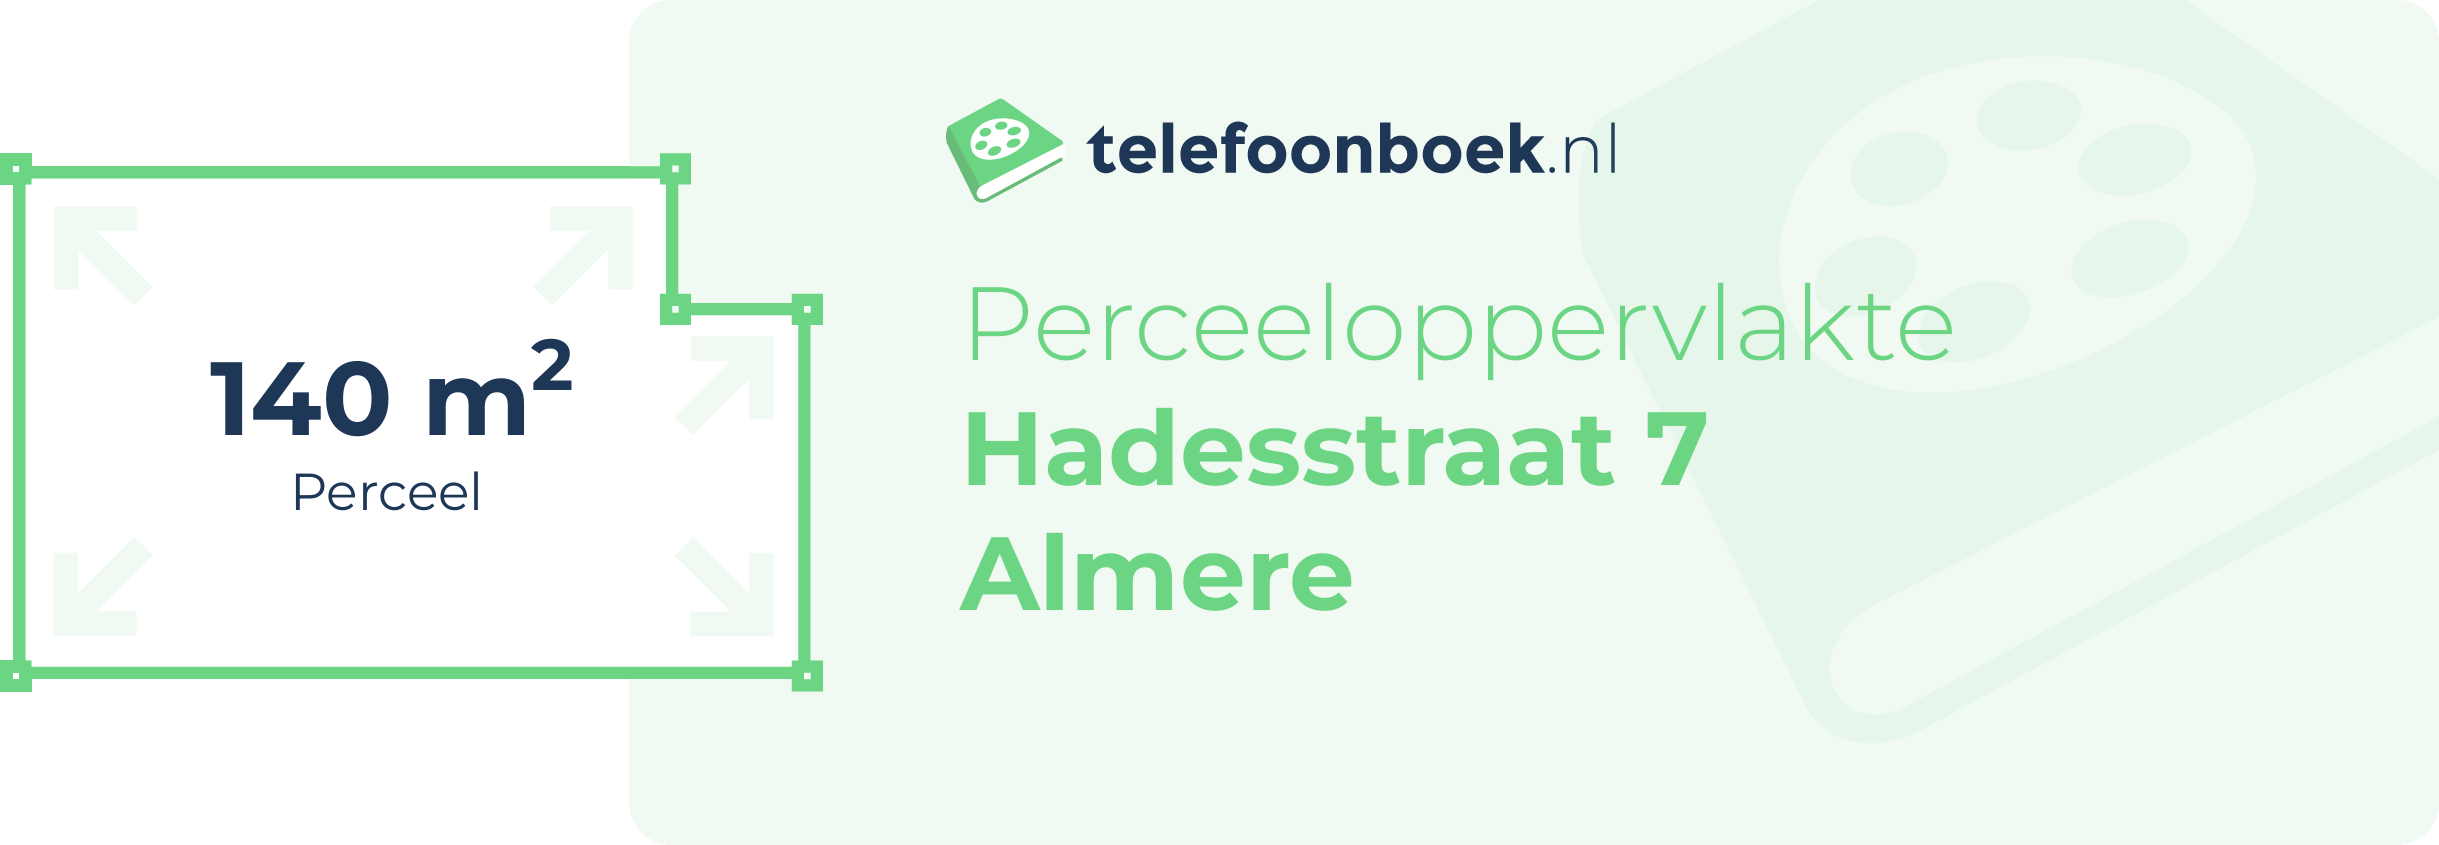 Perceeloppervlakte Hadesstraat 7 Almere